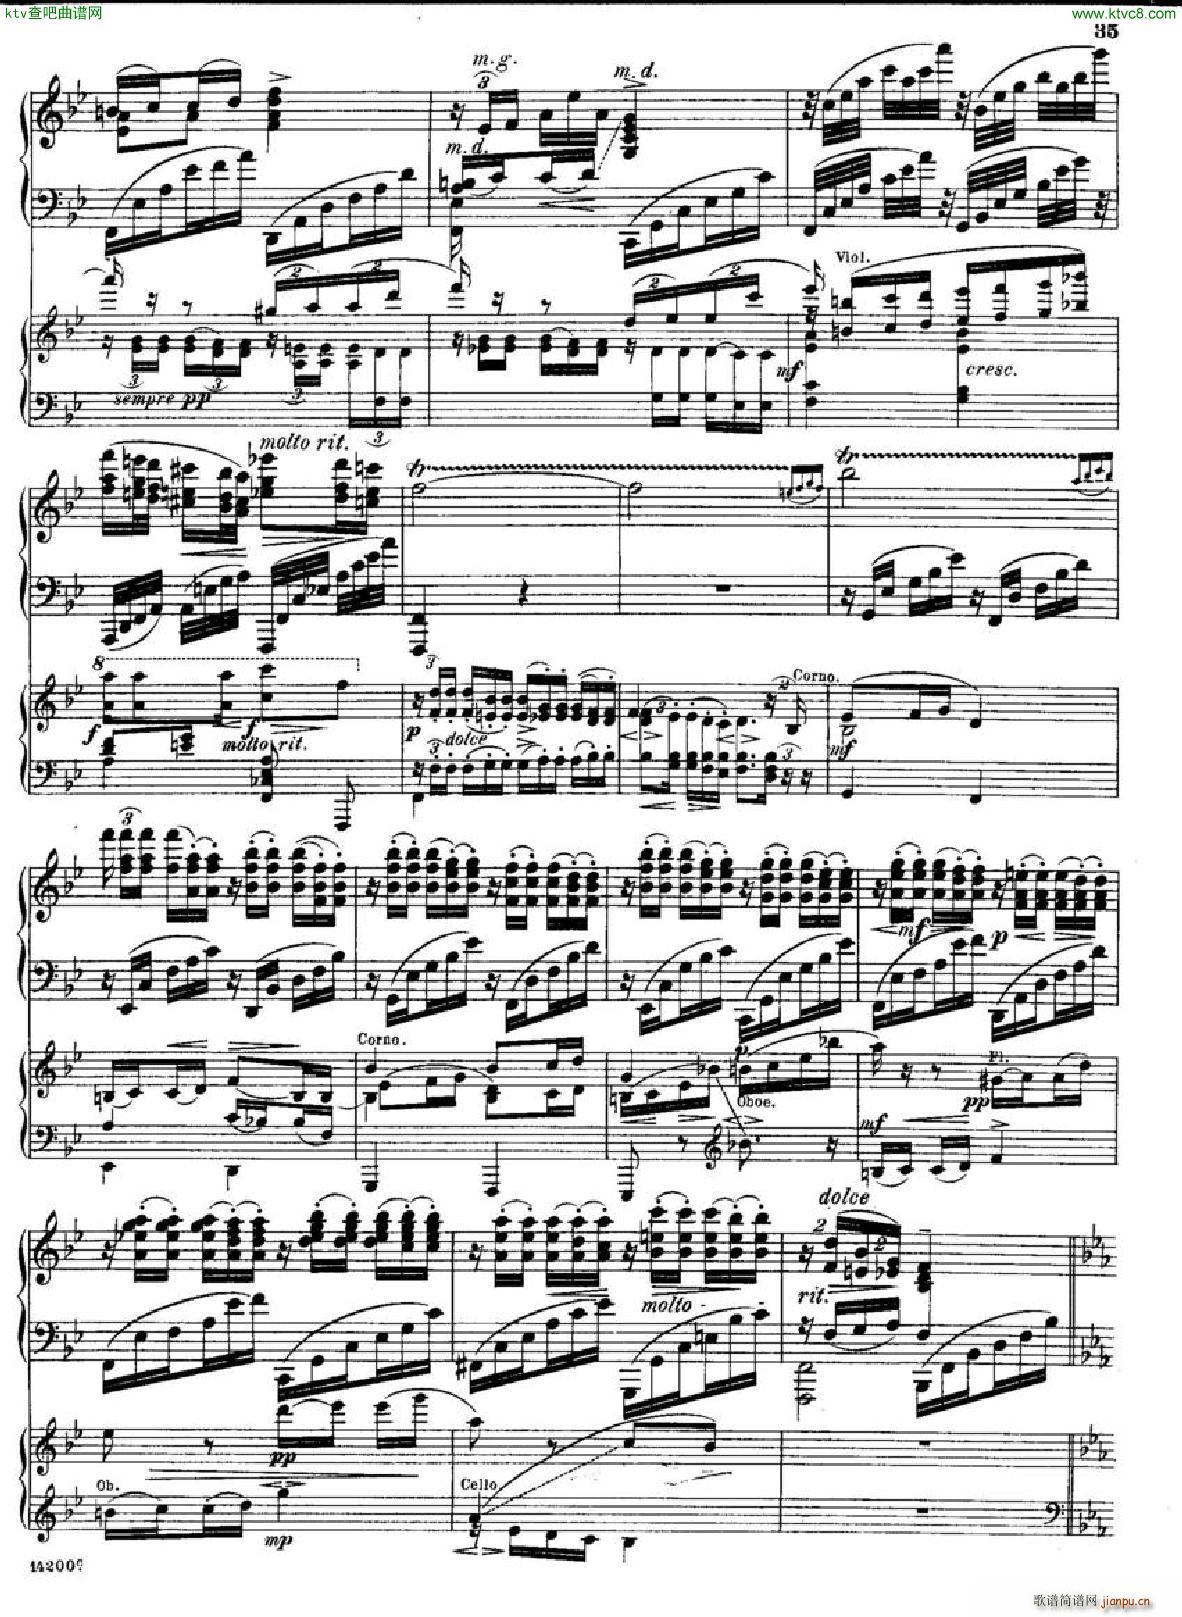 huss concerto part3()1